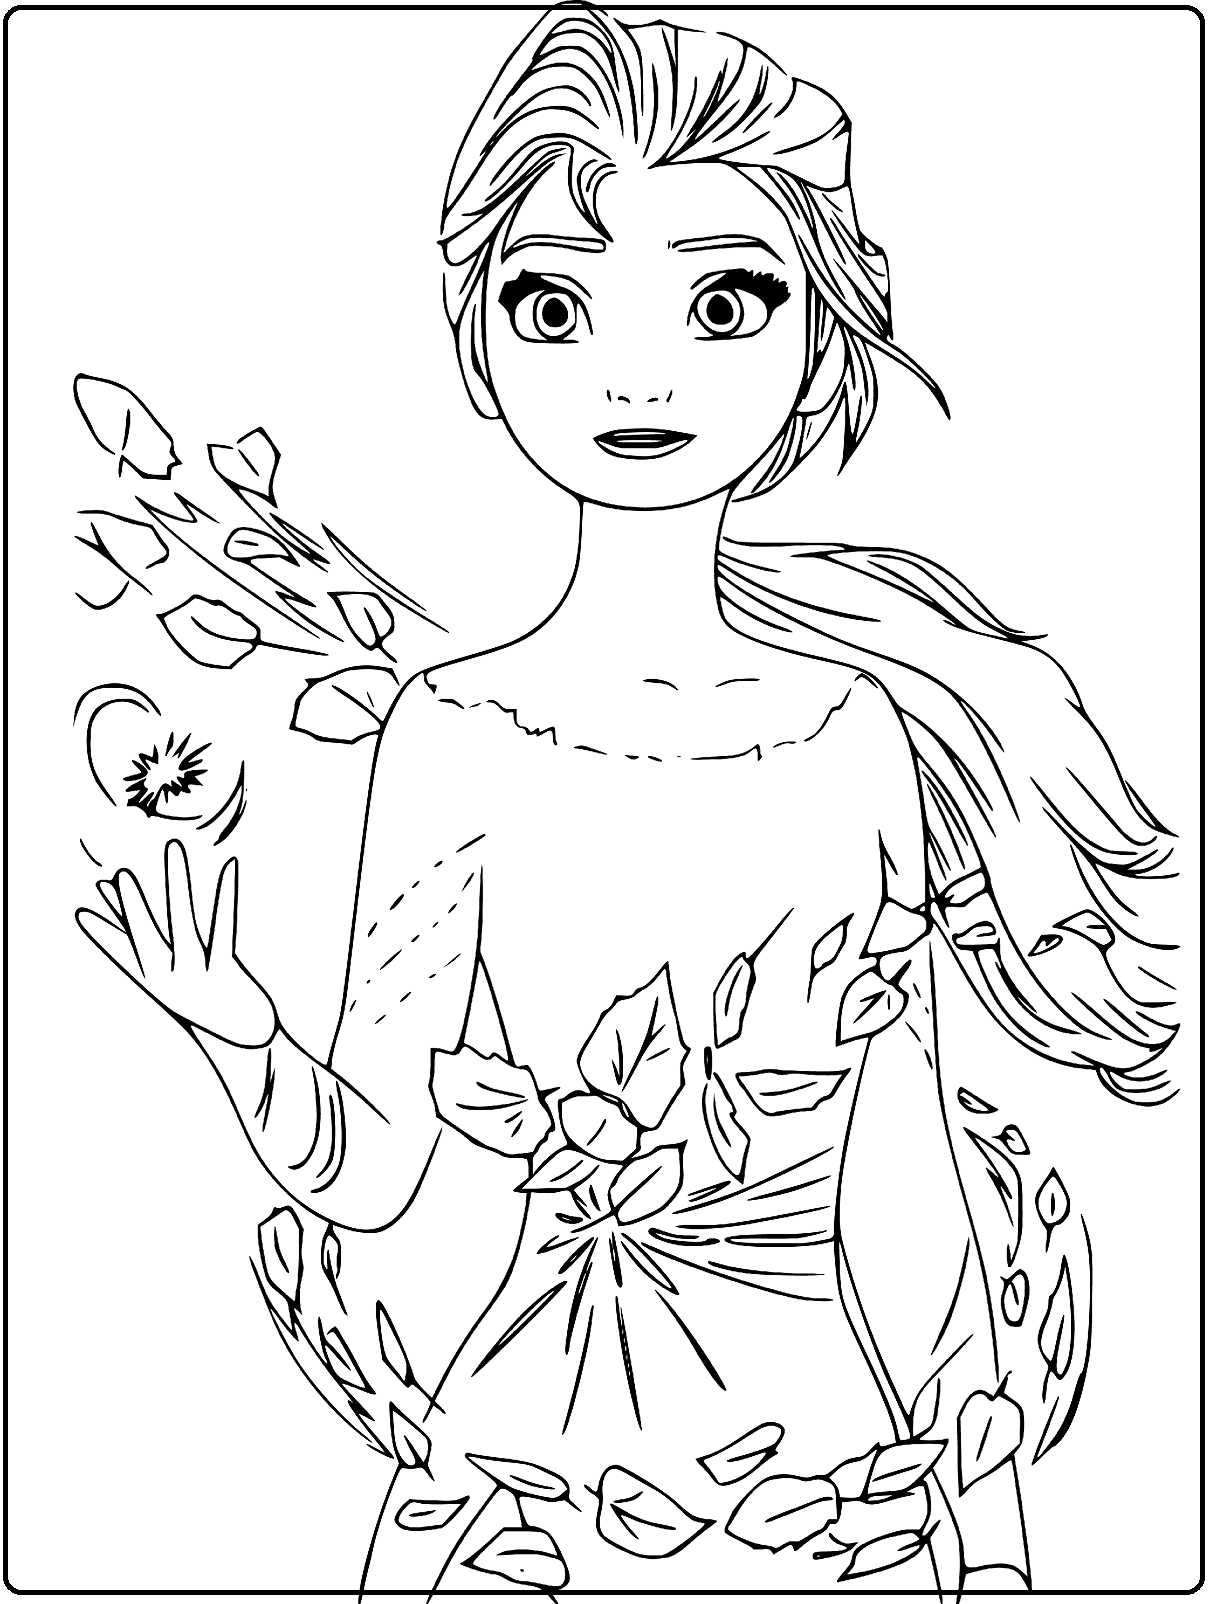 Printable Elsa Portrait Coloring Page for kids.